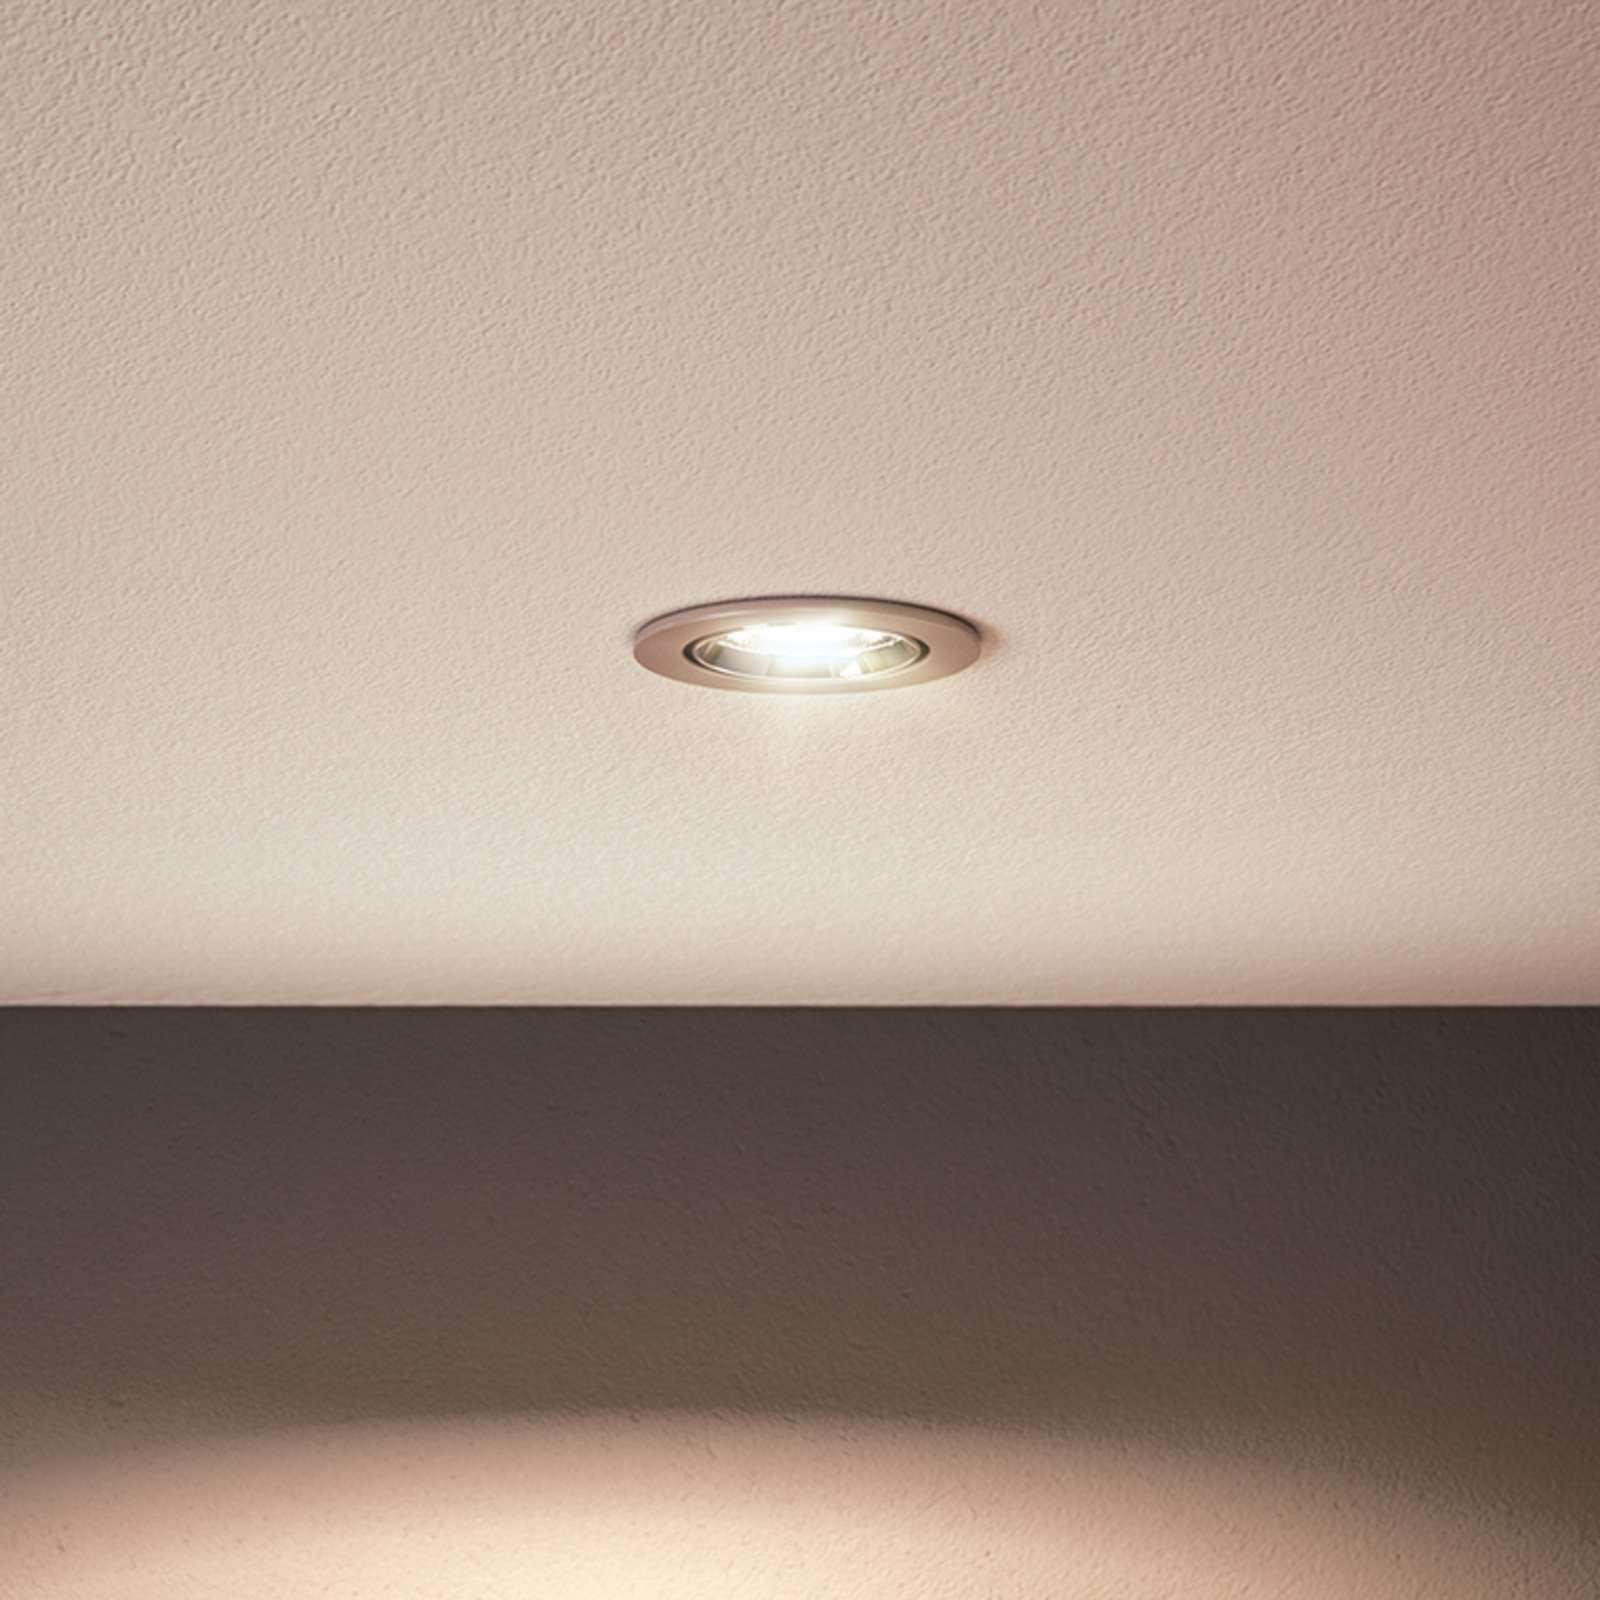 Philips LED lamp GU10 4,6W 390lm 840 h. 36° per 6